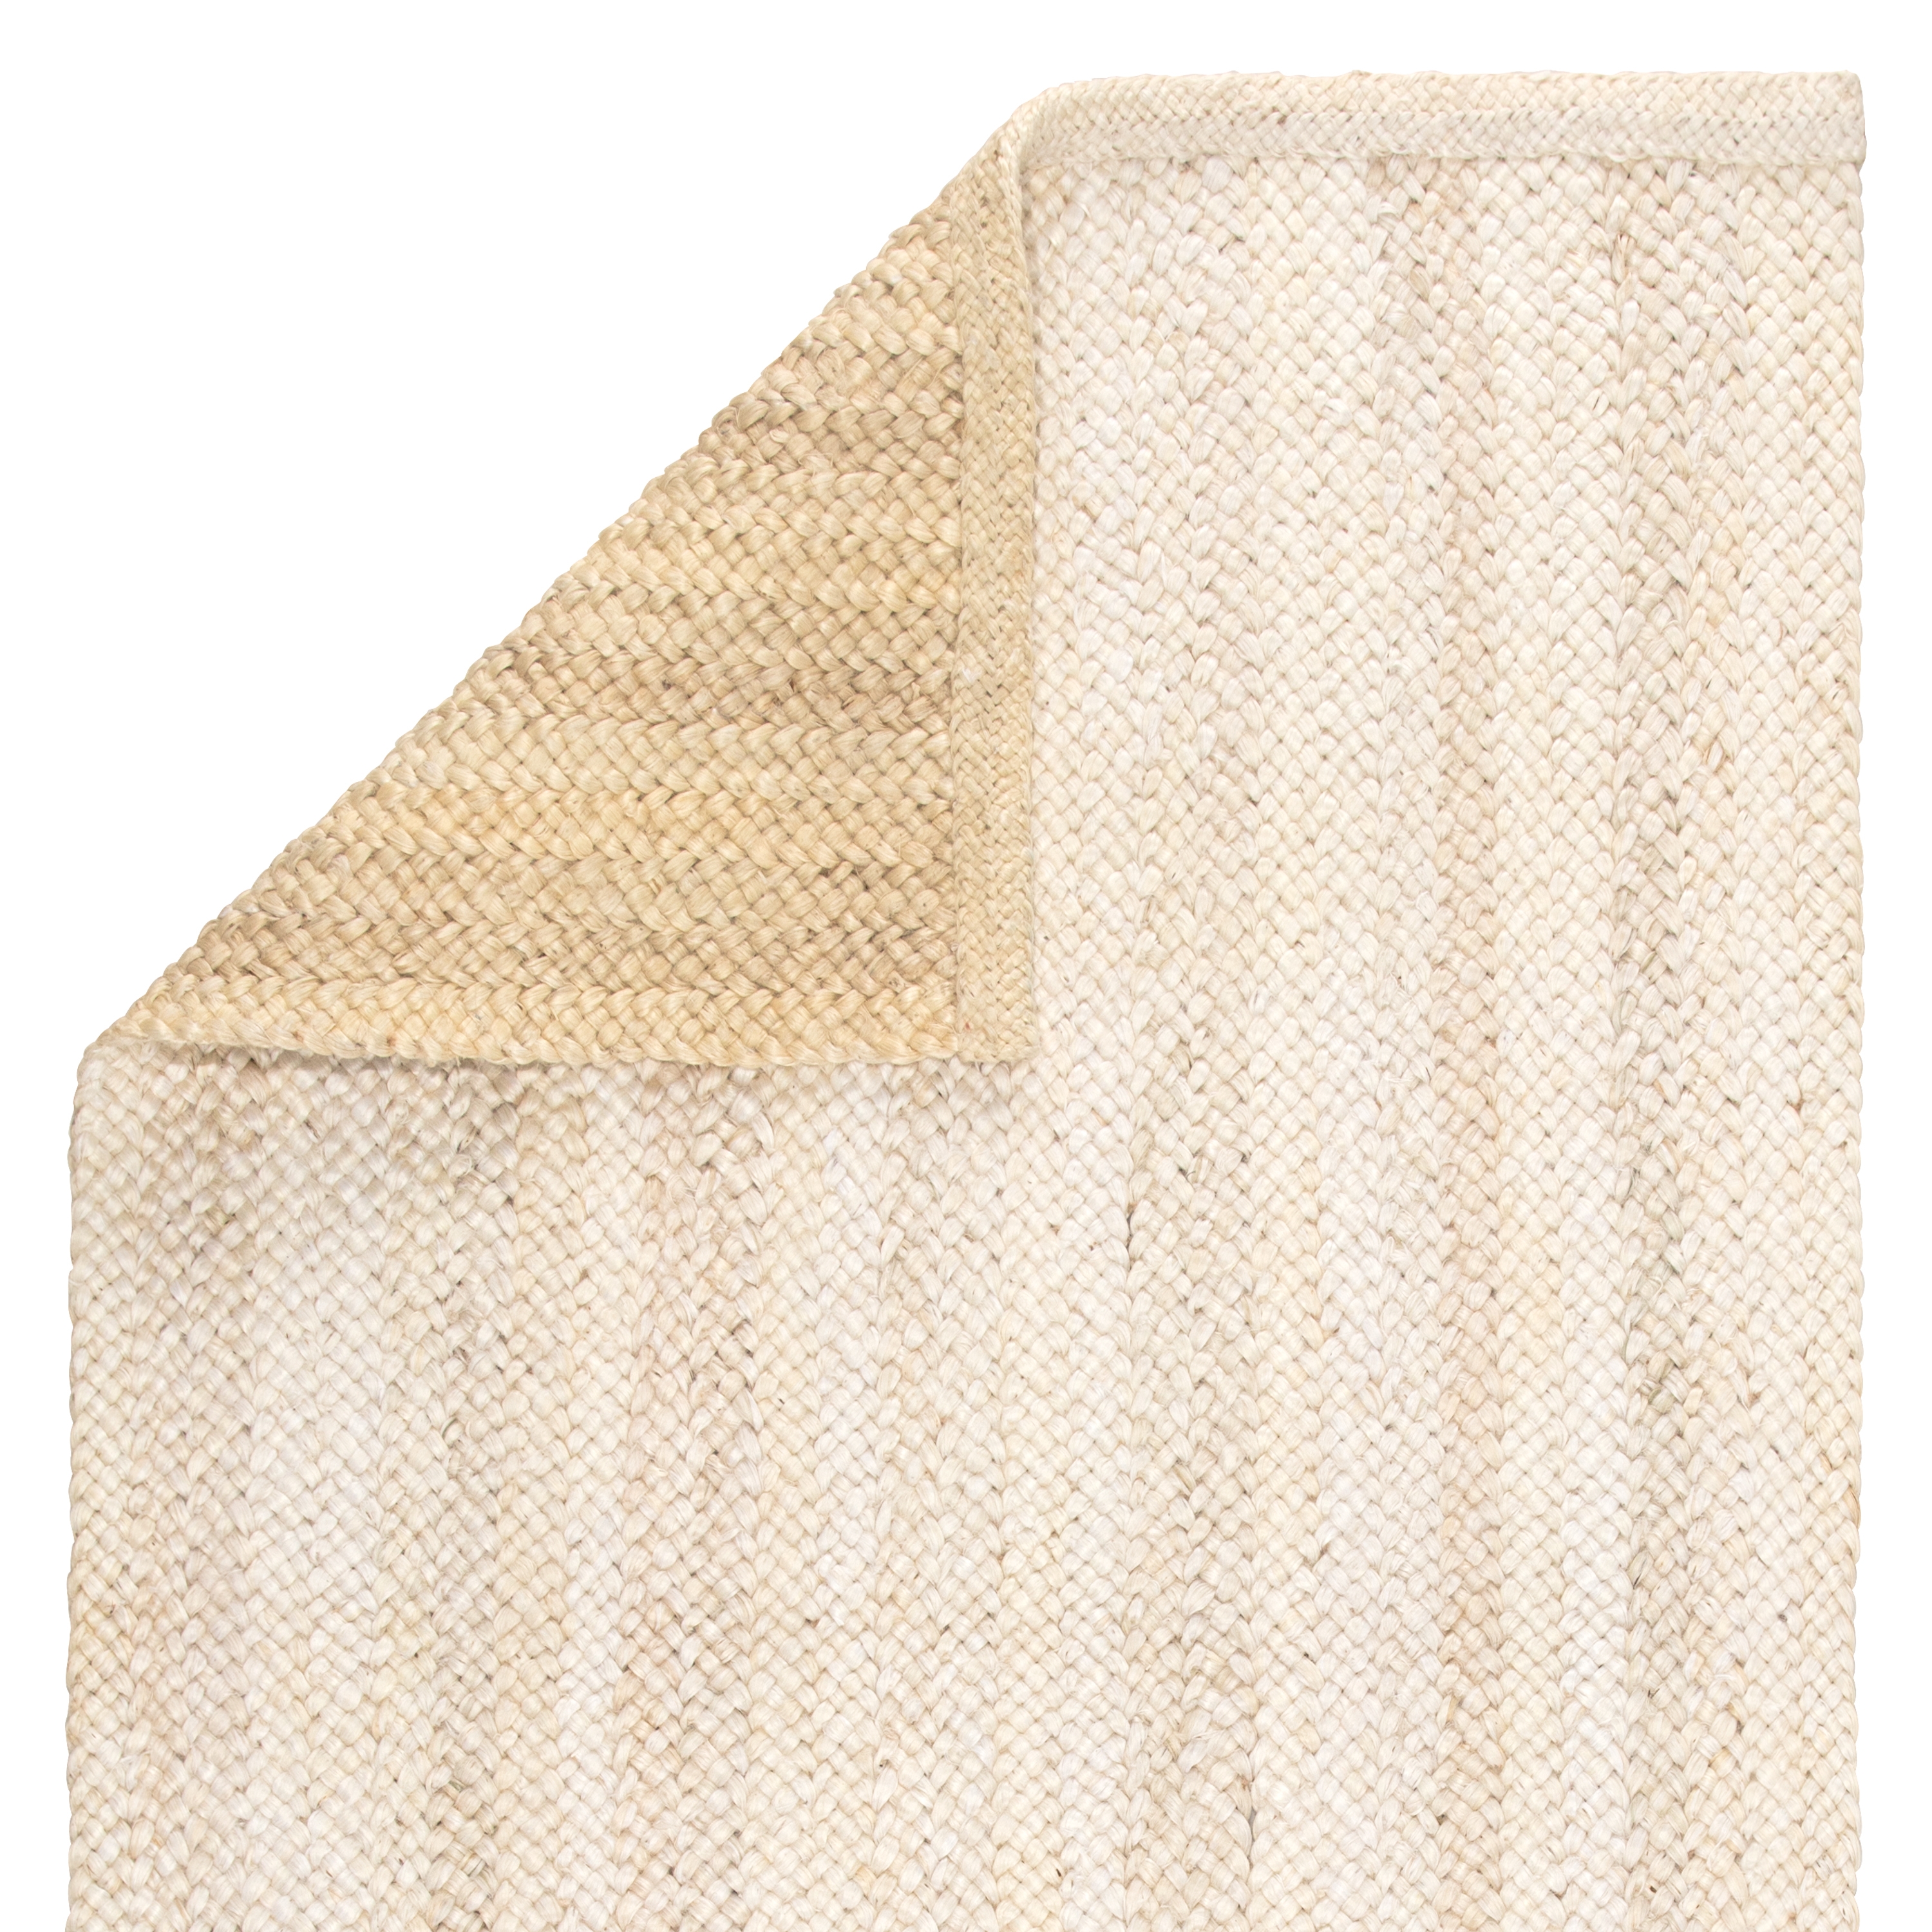 Anichini Natural Solid Ivory/ Beige Area Rug (10'X14') - Image 2